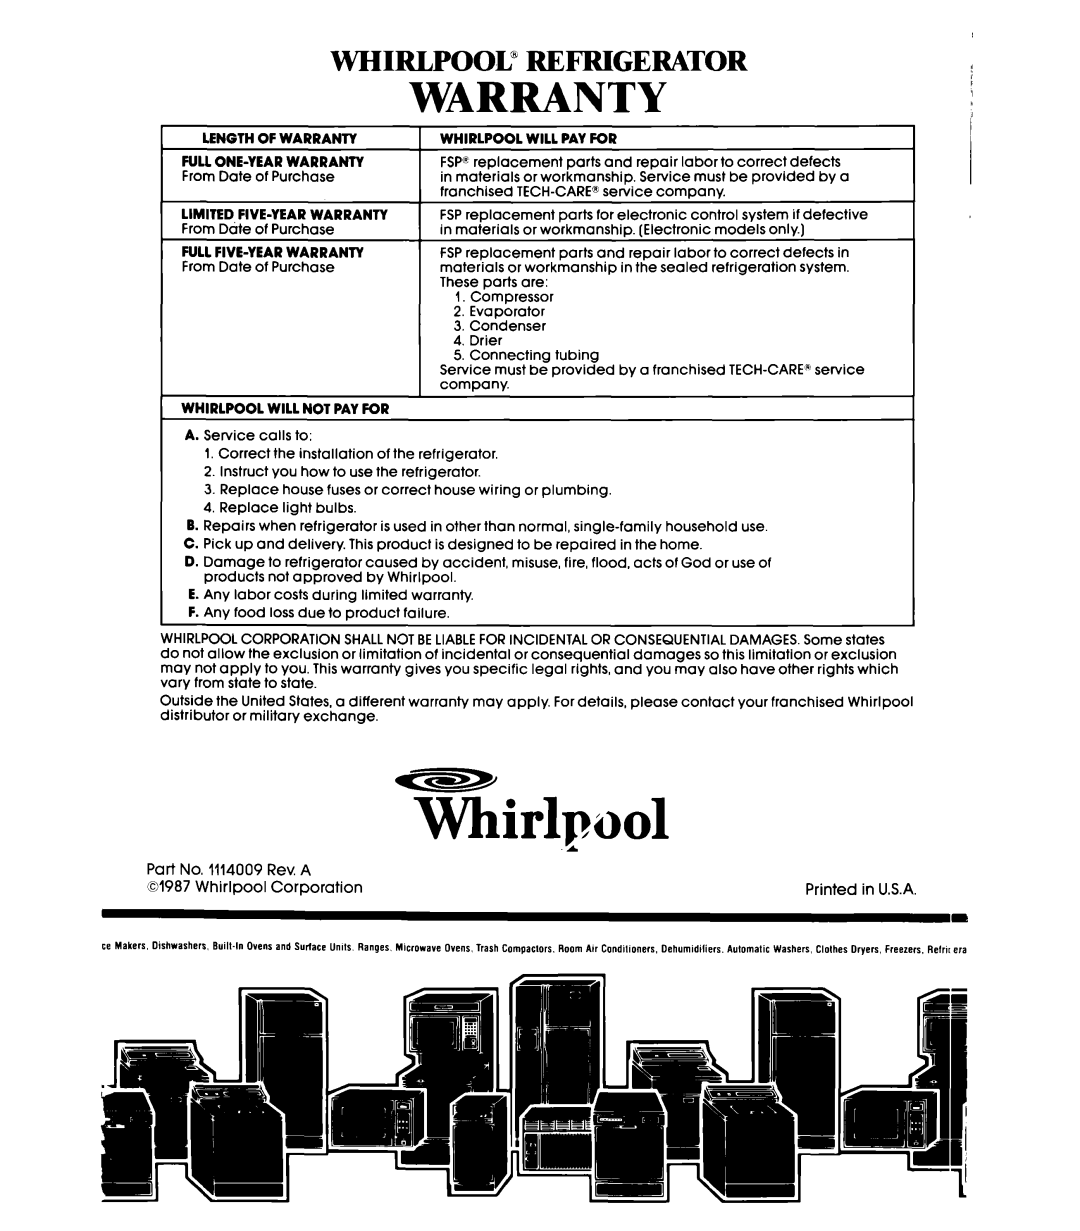 Whirlpool EL15SC manual Whirlpool”, Refrigerator, Warranty 